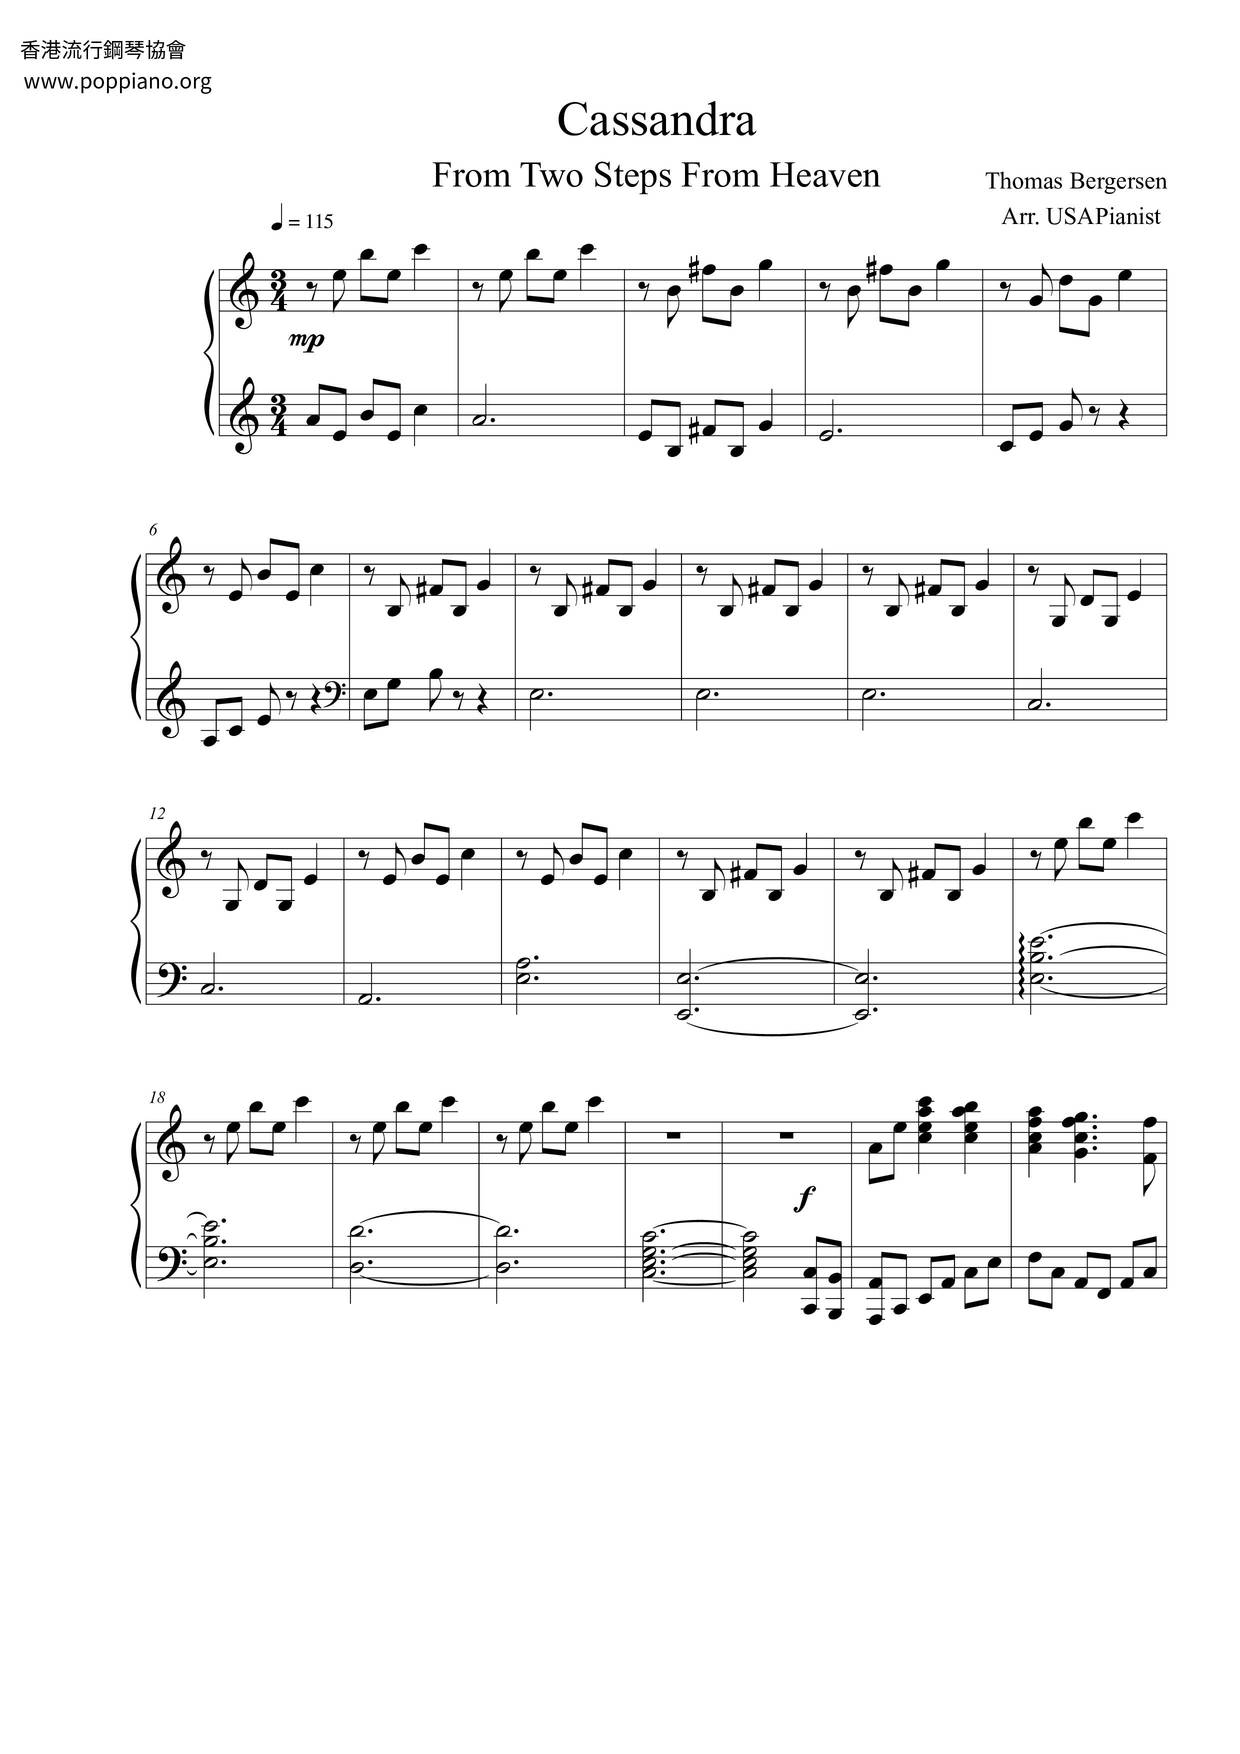 Cassandraピアノ譜